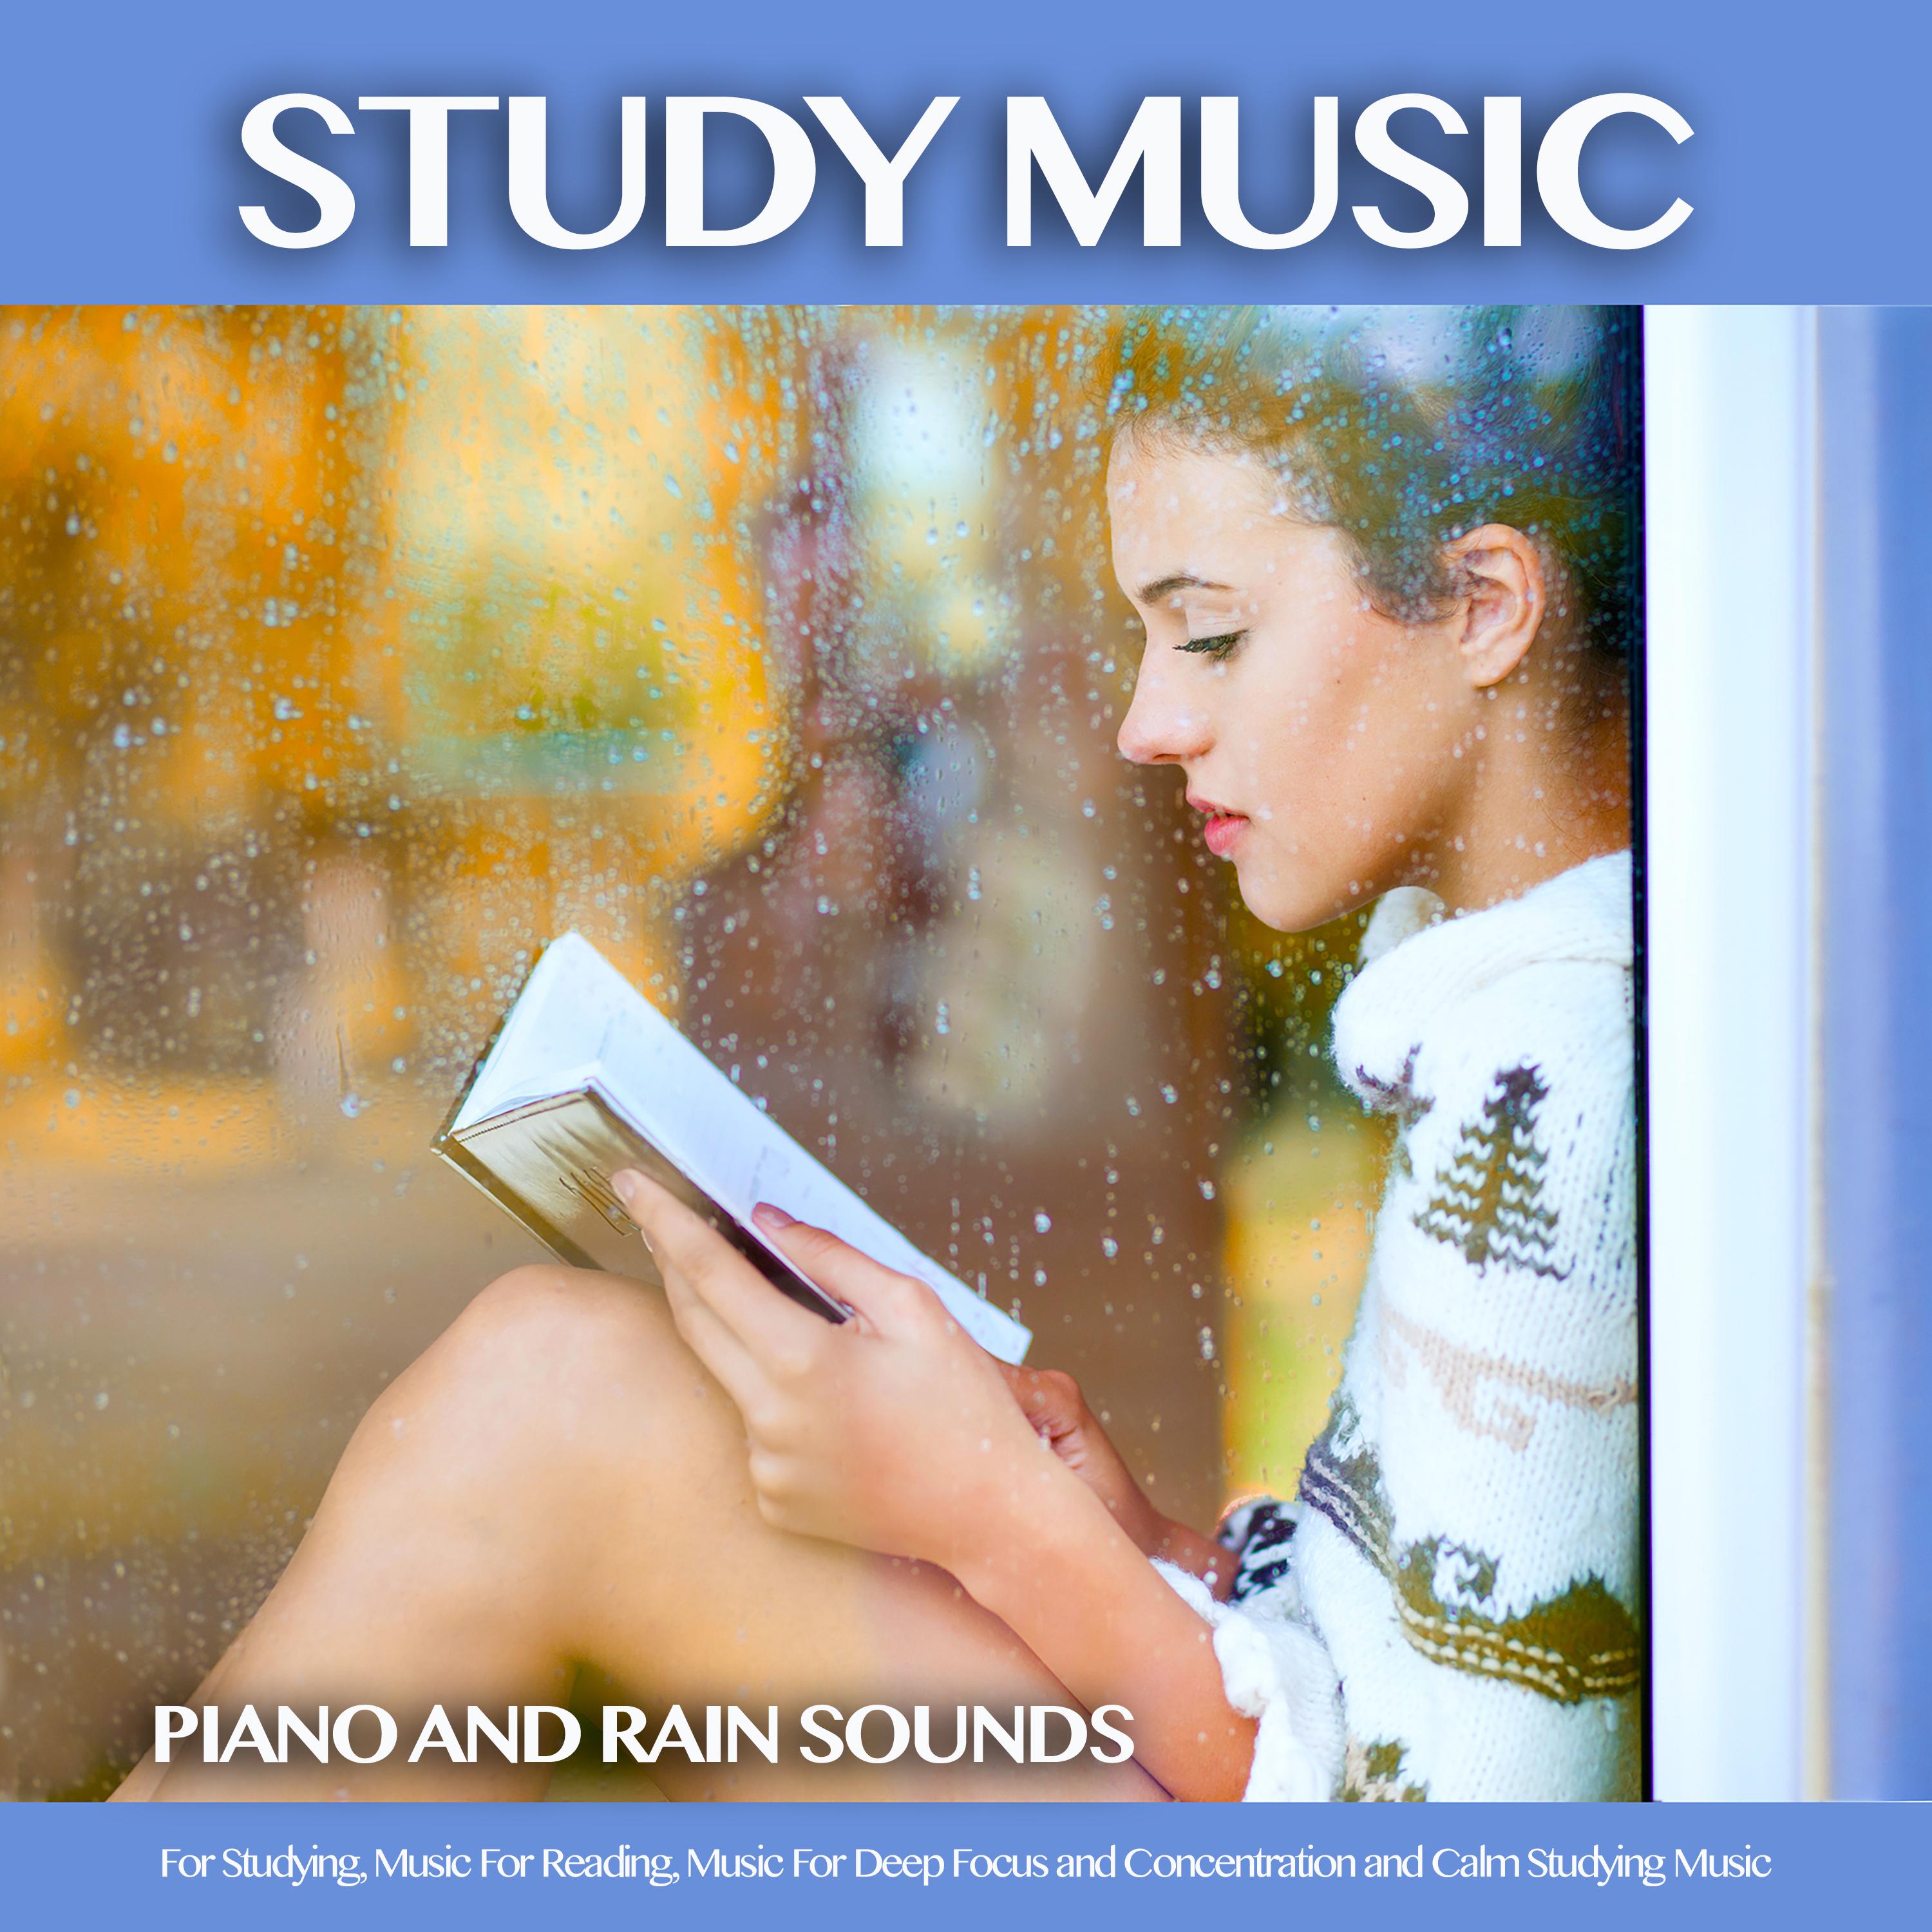 Study Music and Sounds of Rain